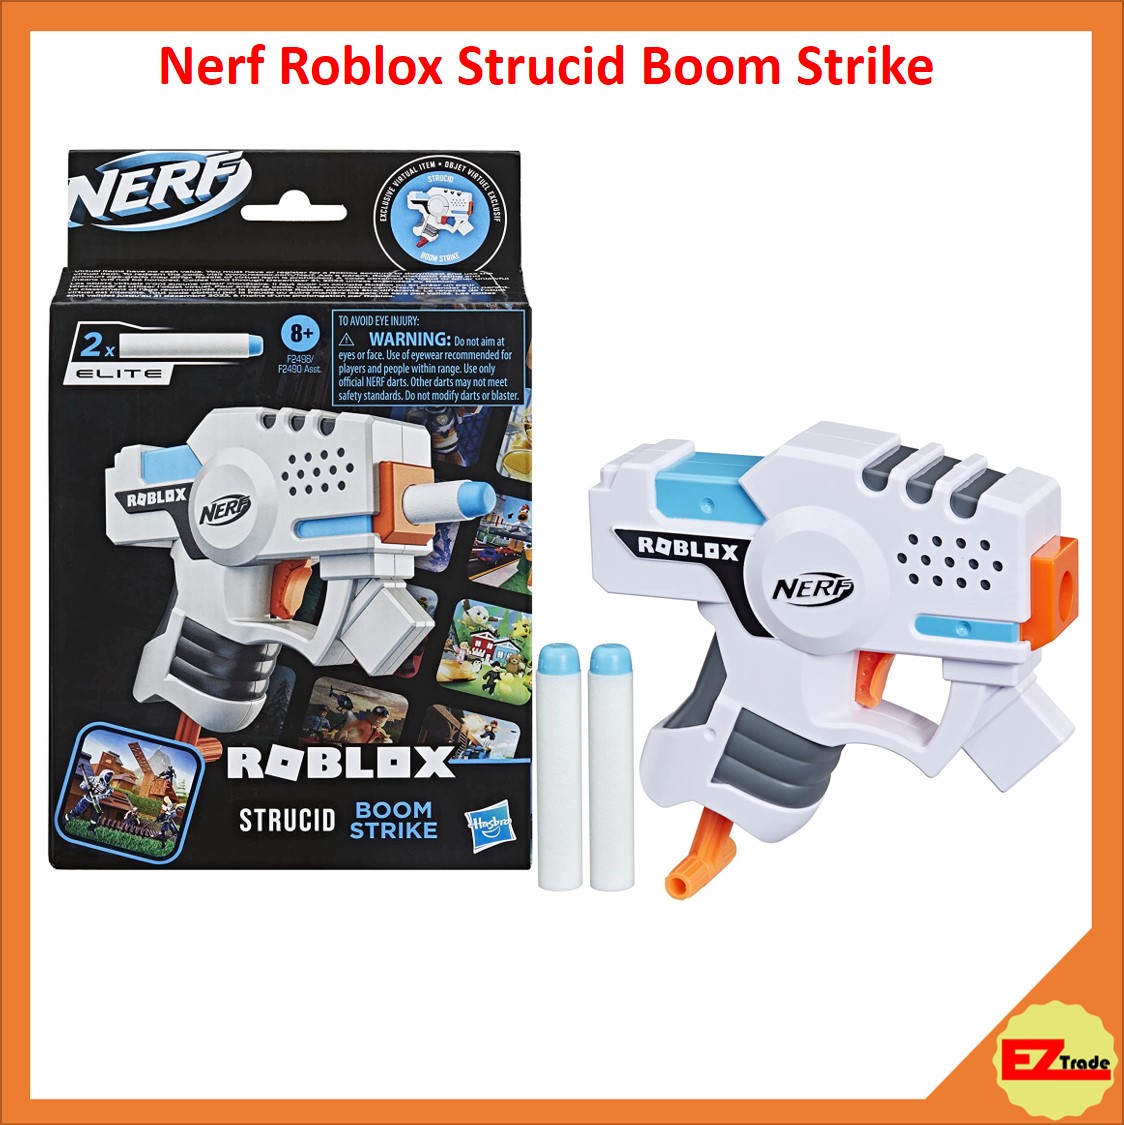 NEW ROBLOX Strucid BOOM Strike Nerf Dart Gun With Virtual Item